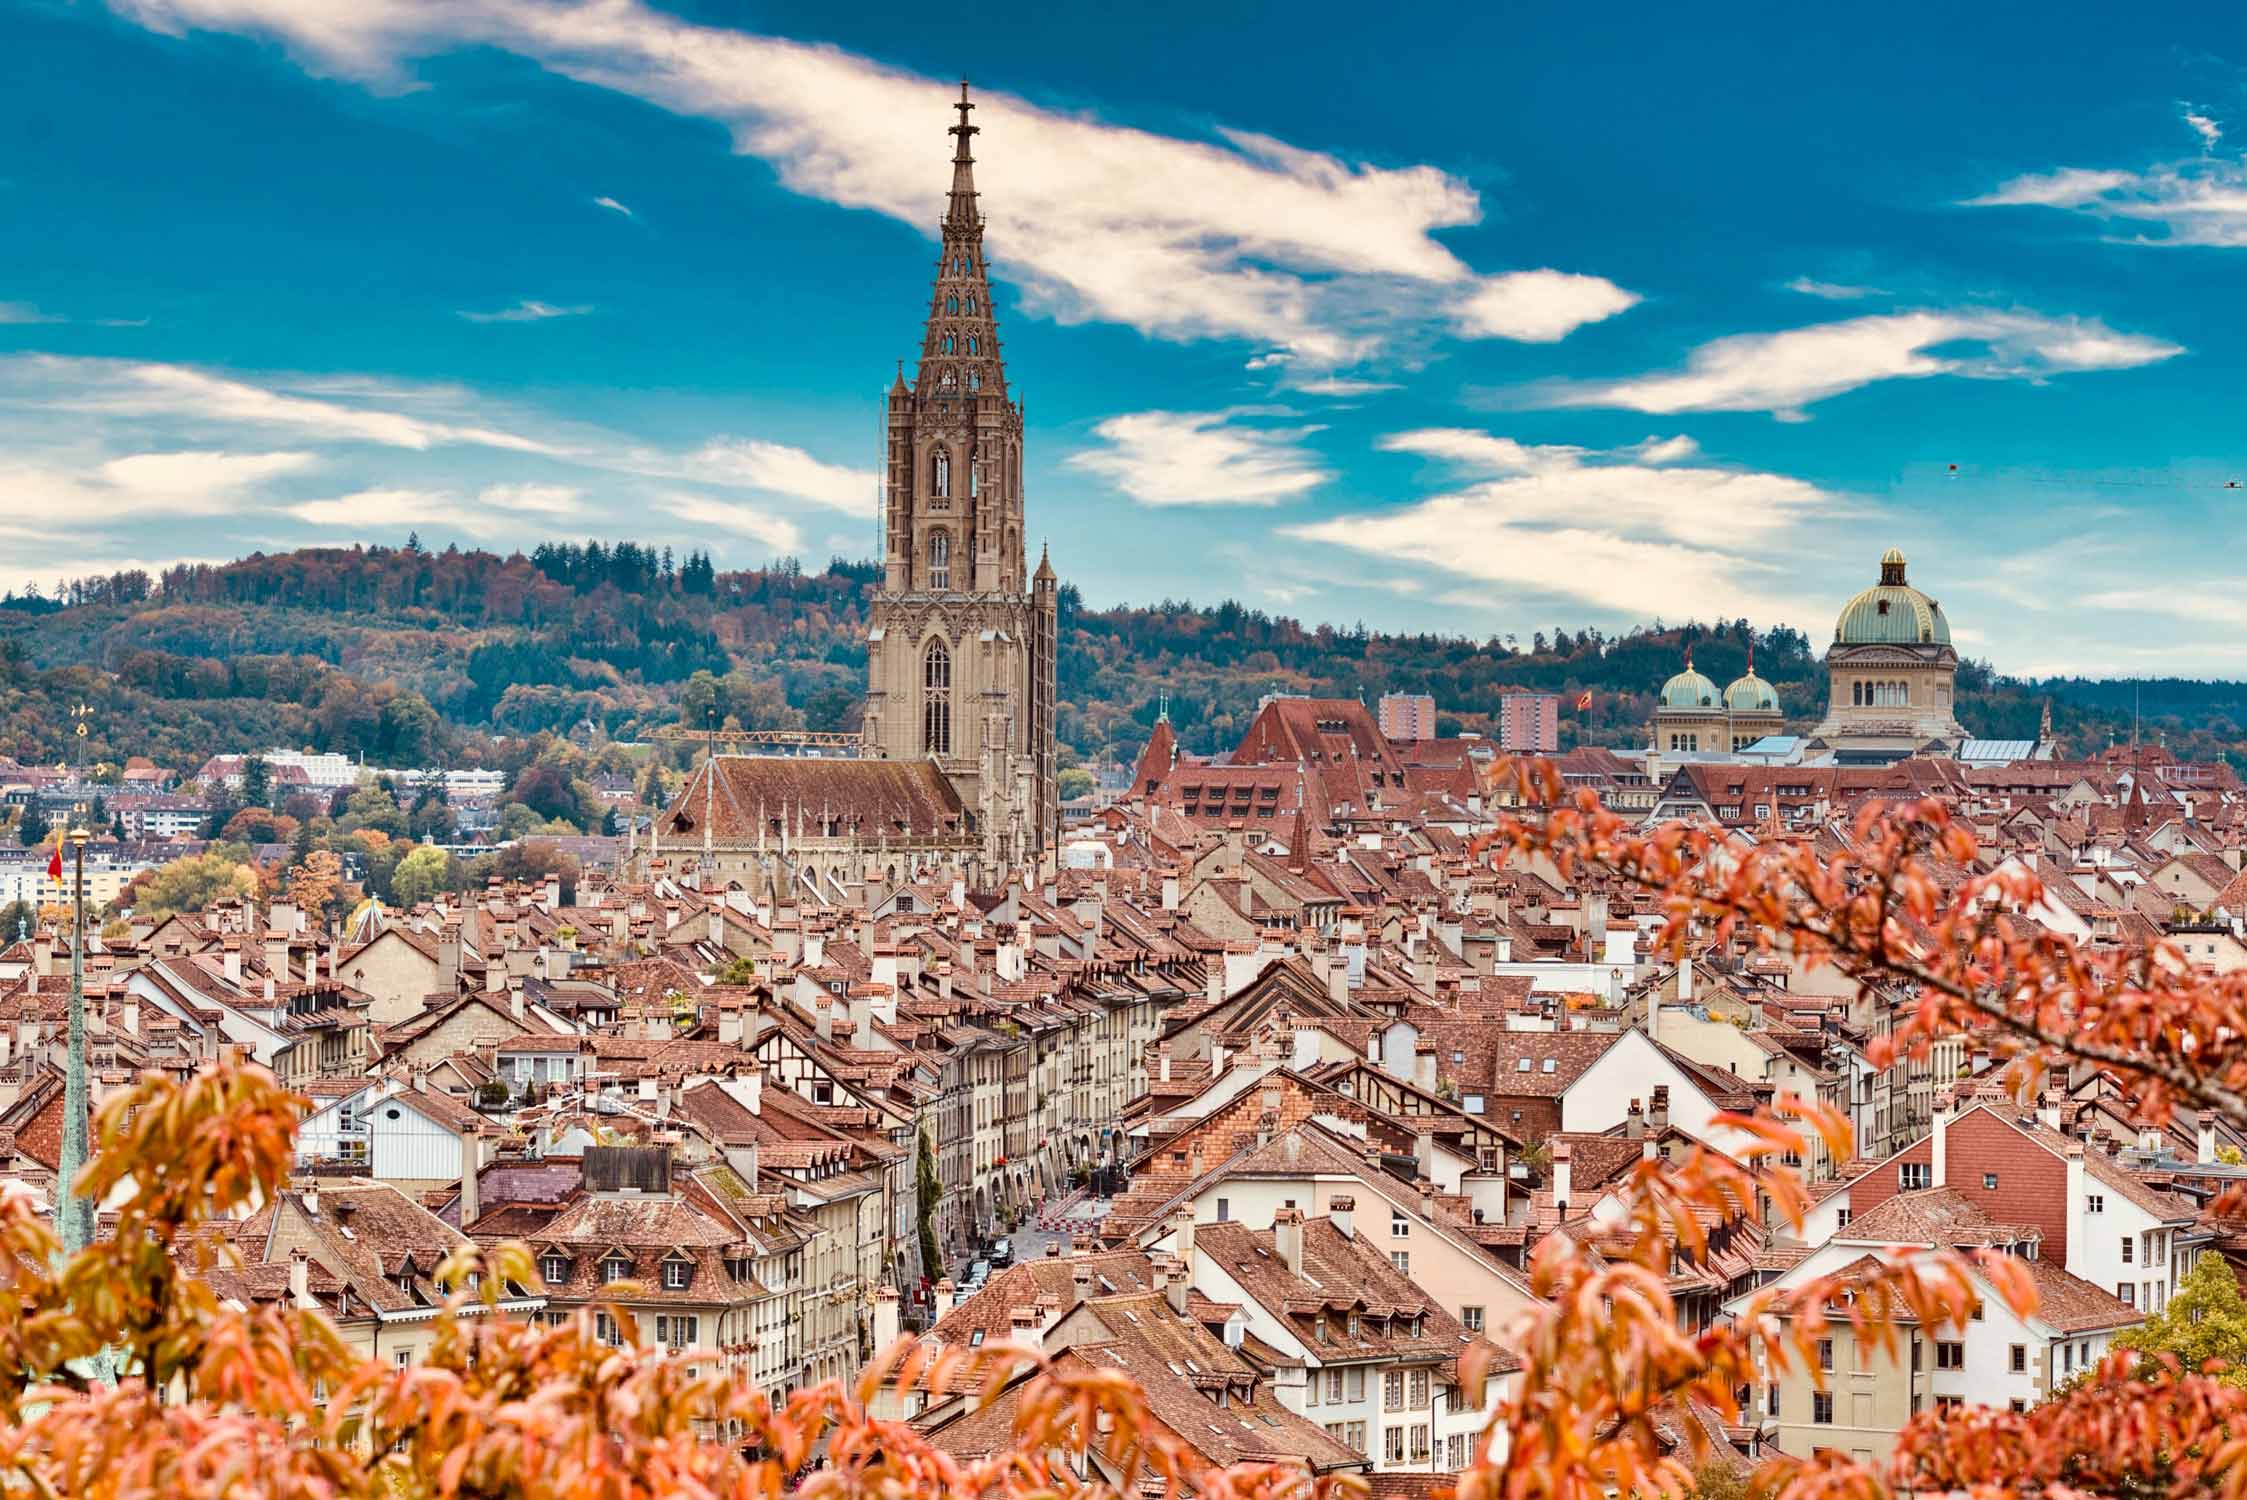 Bern's Old Town